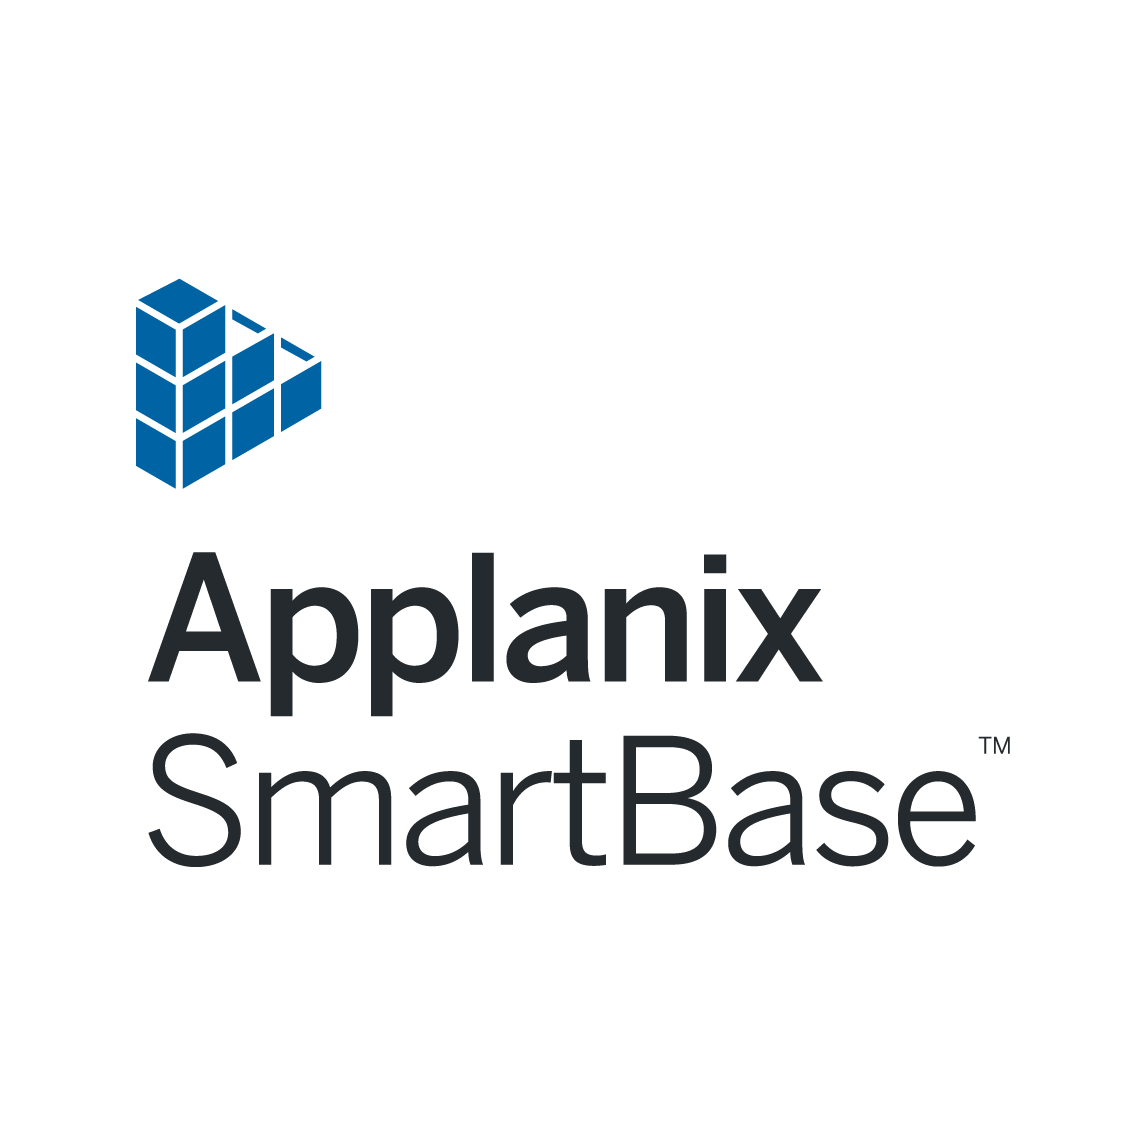 Applanix SmartBase Logo